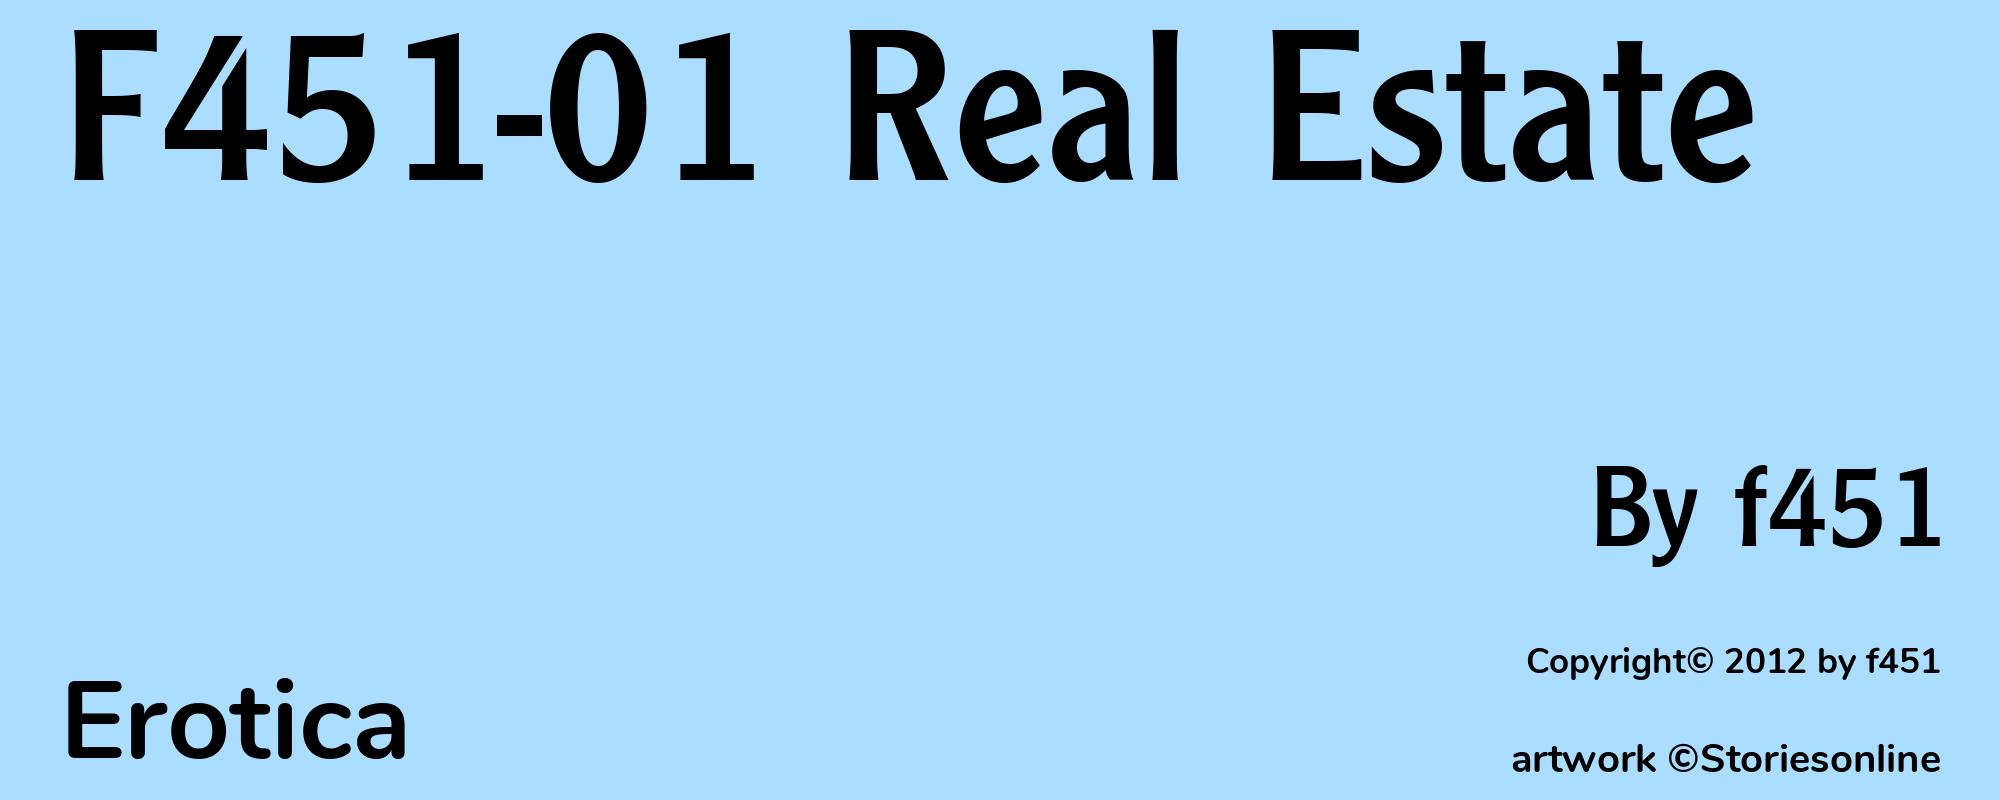 F451-01 Real Estate - Cover